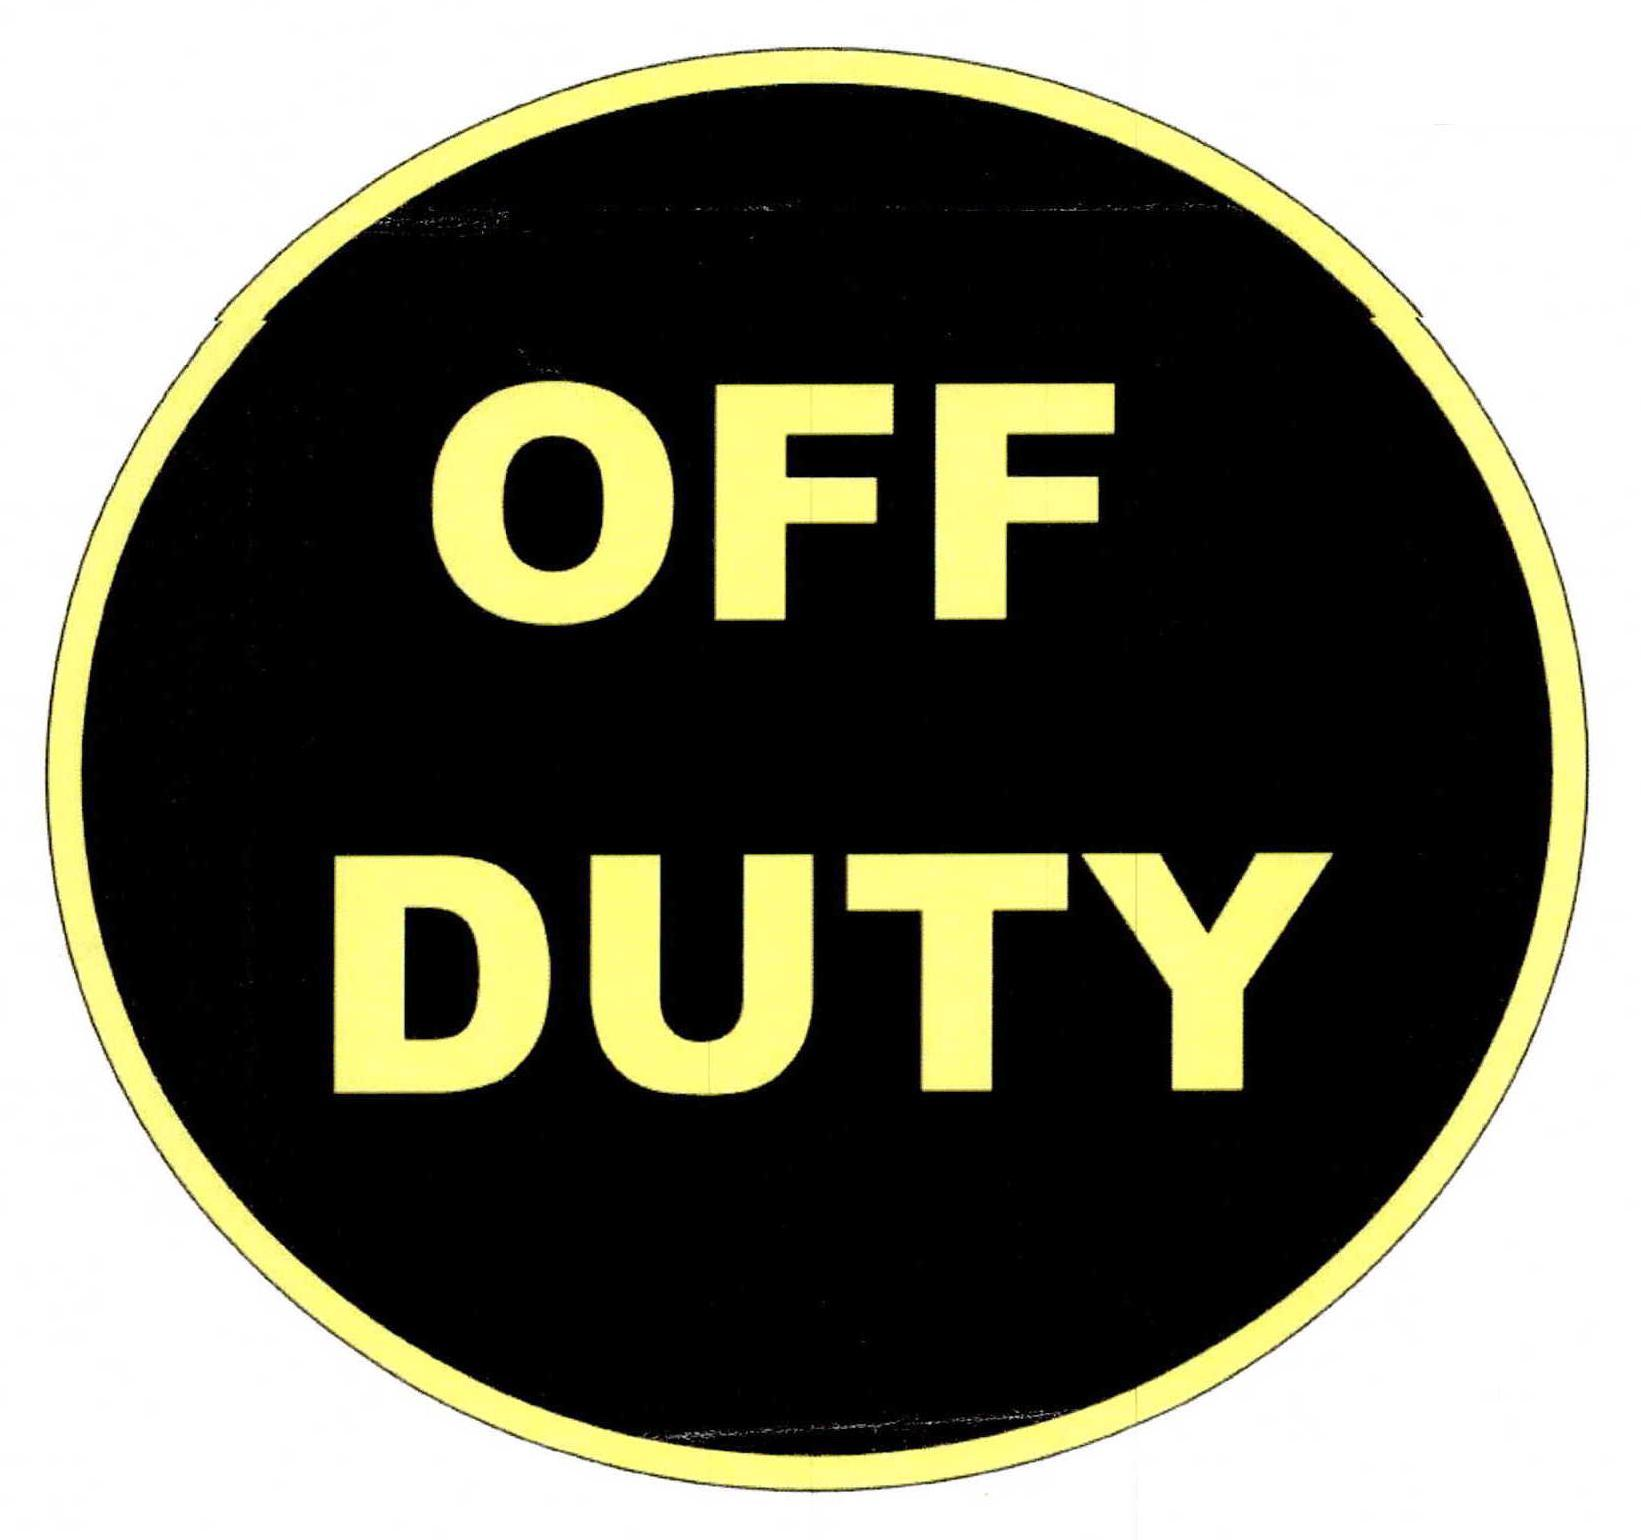 OFF DUTY - Off Duty Publications Gmbh Trademark Registration